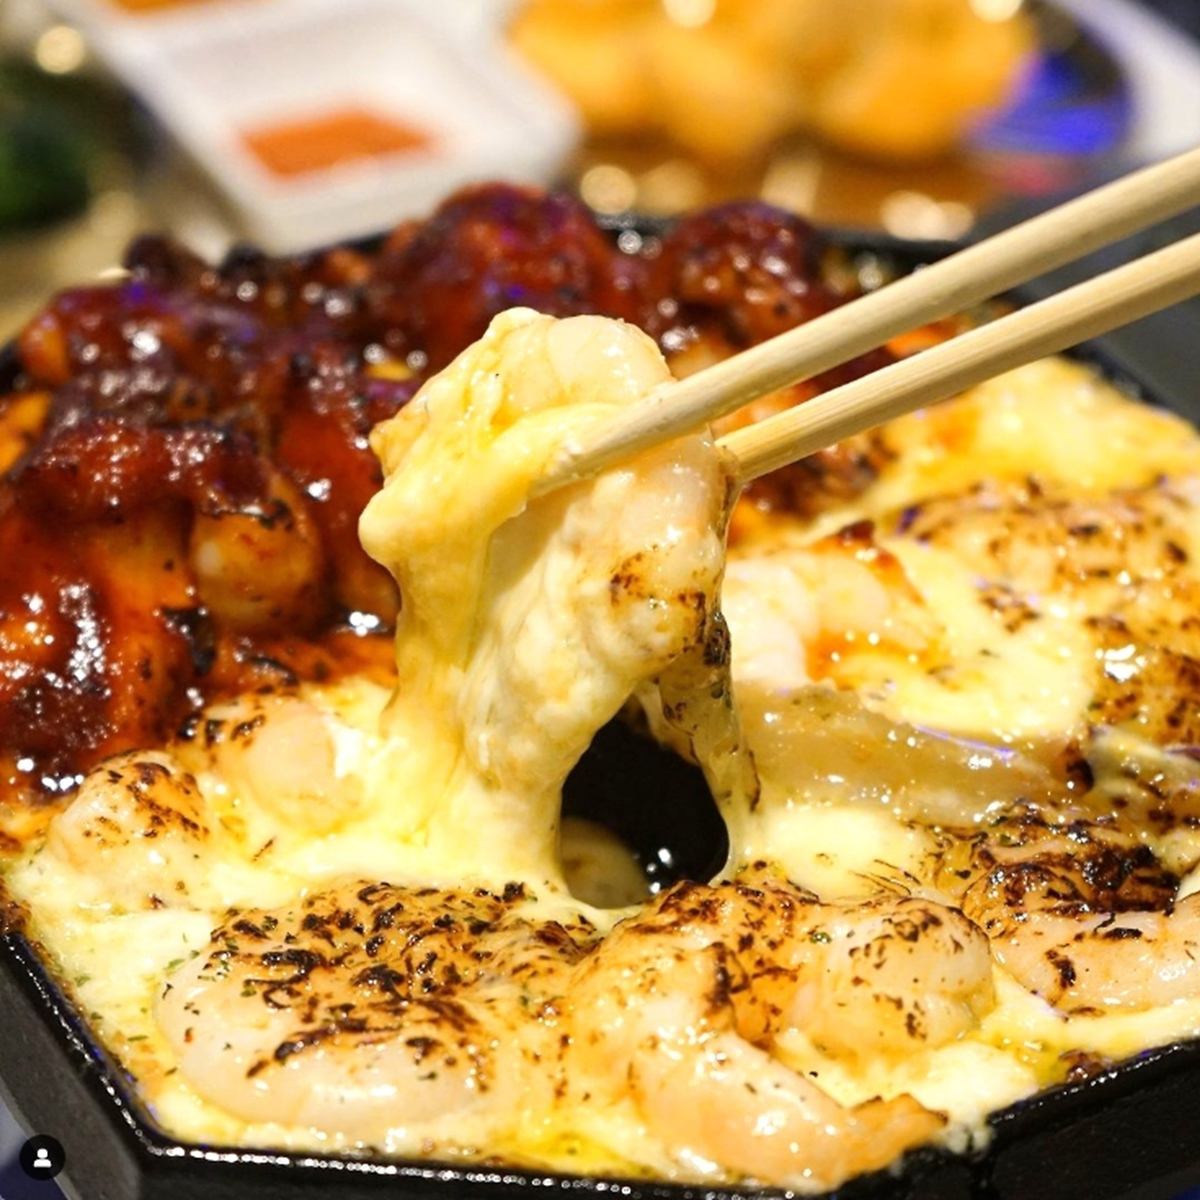 [Exquisite] Enjoy samgyeopsal and shrimp cheese fondue♪